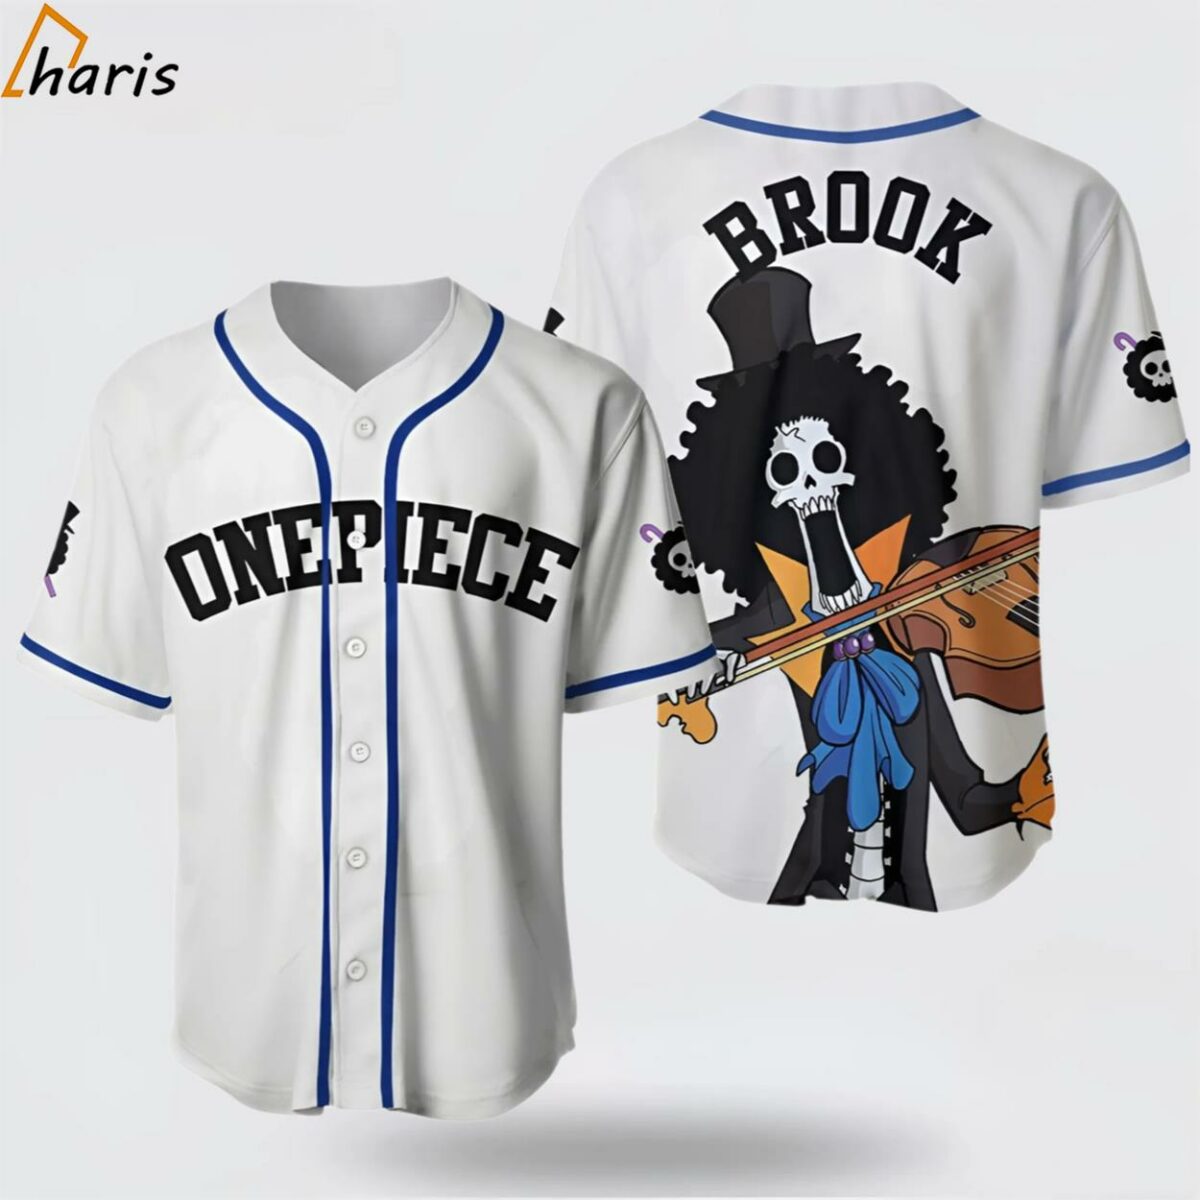 Brook One Piece Custom Anime Baseball Jersey 1 jersey